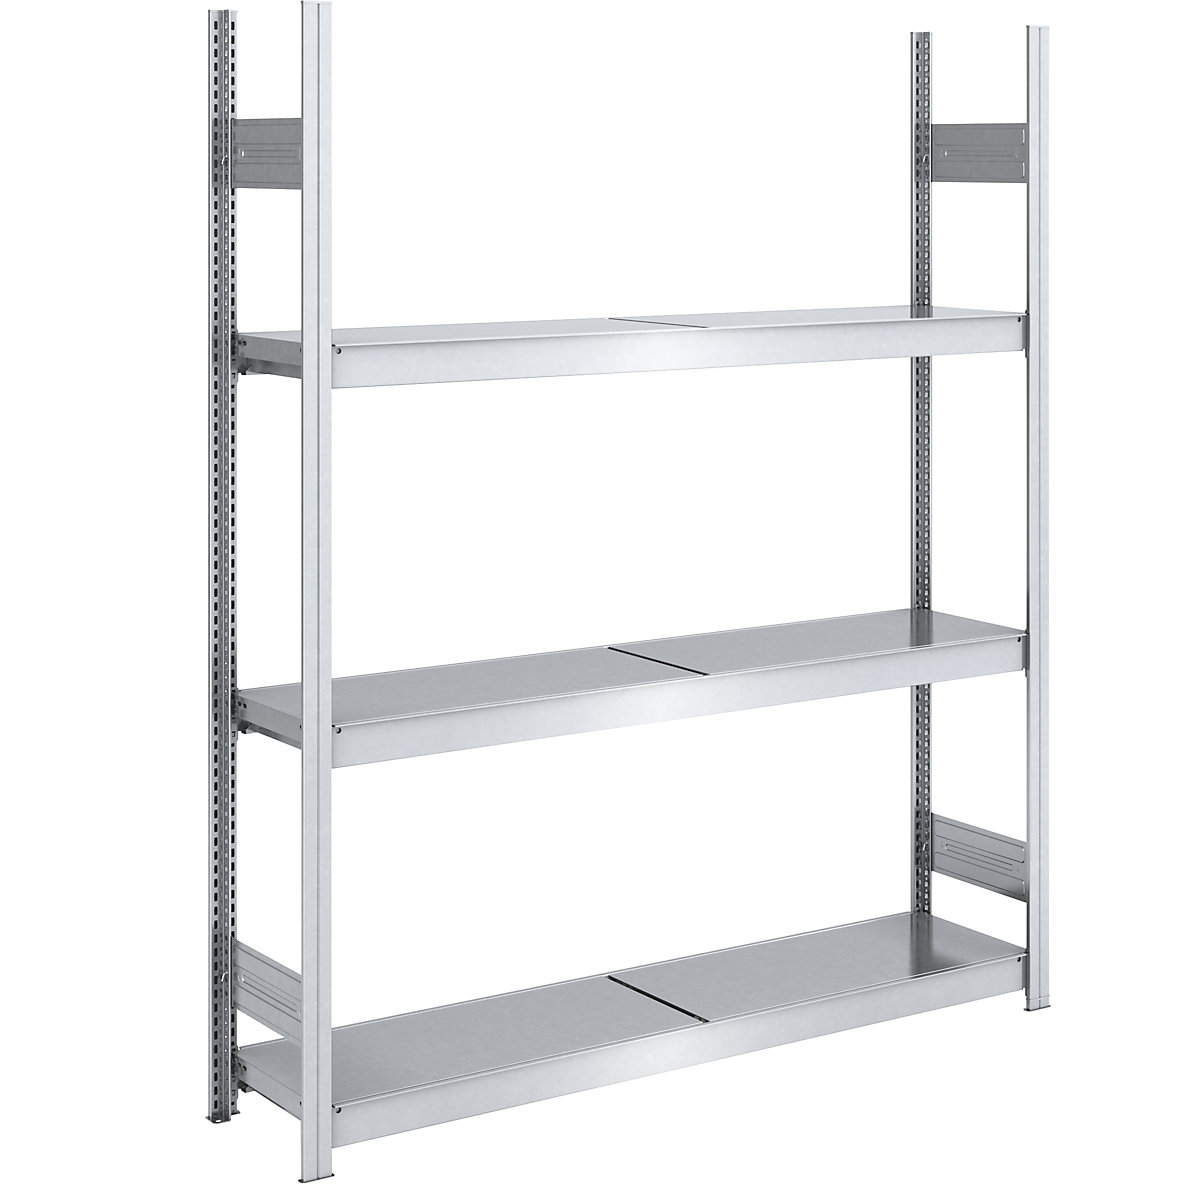 Wide span boltless shelving unit, zinc plated – hofe, shelf WxD 1500 x 400 mm, standard shelf unit, 3 steel shelves, height 2000 mm